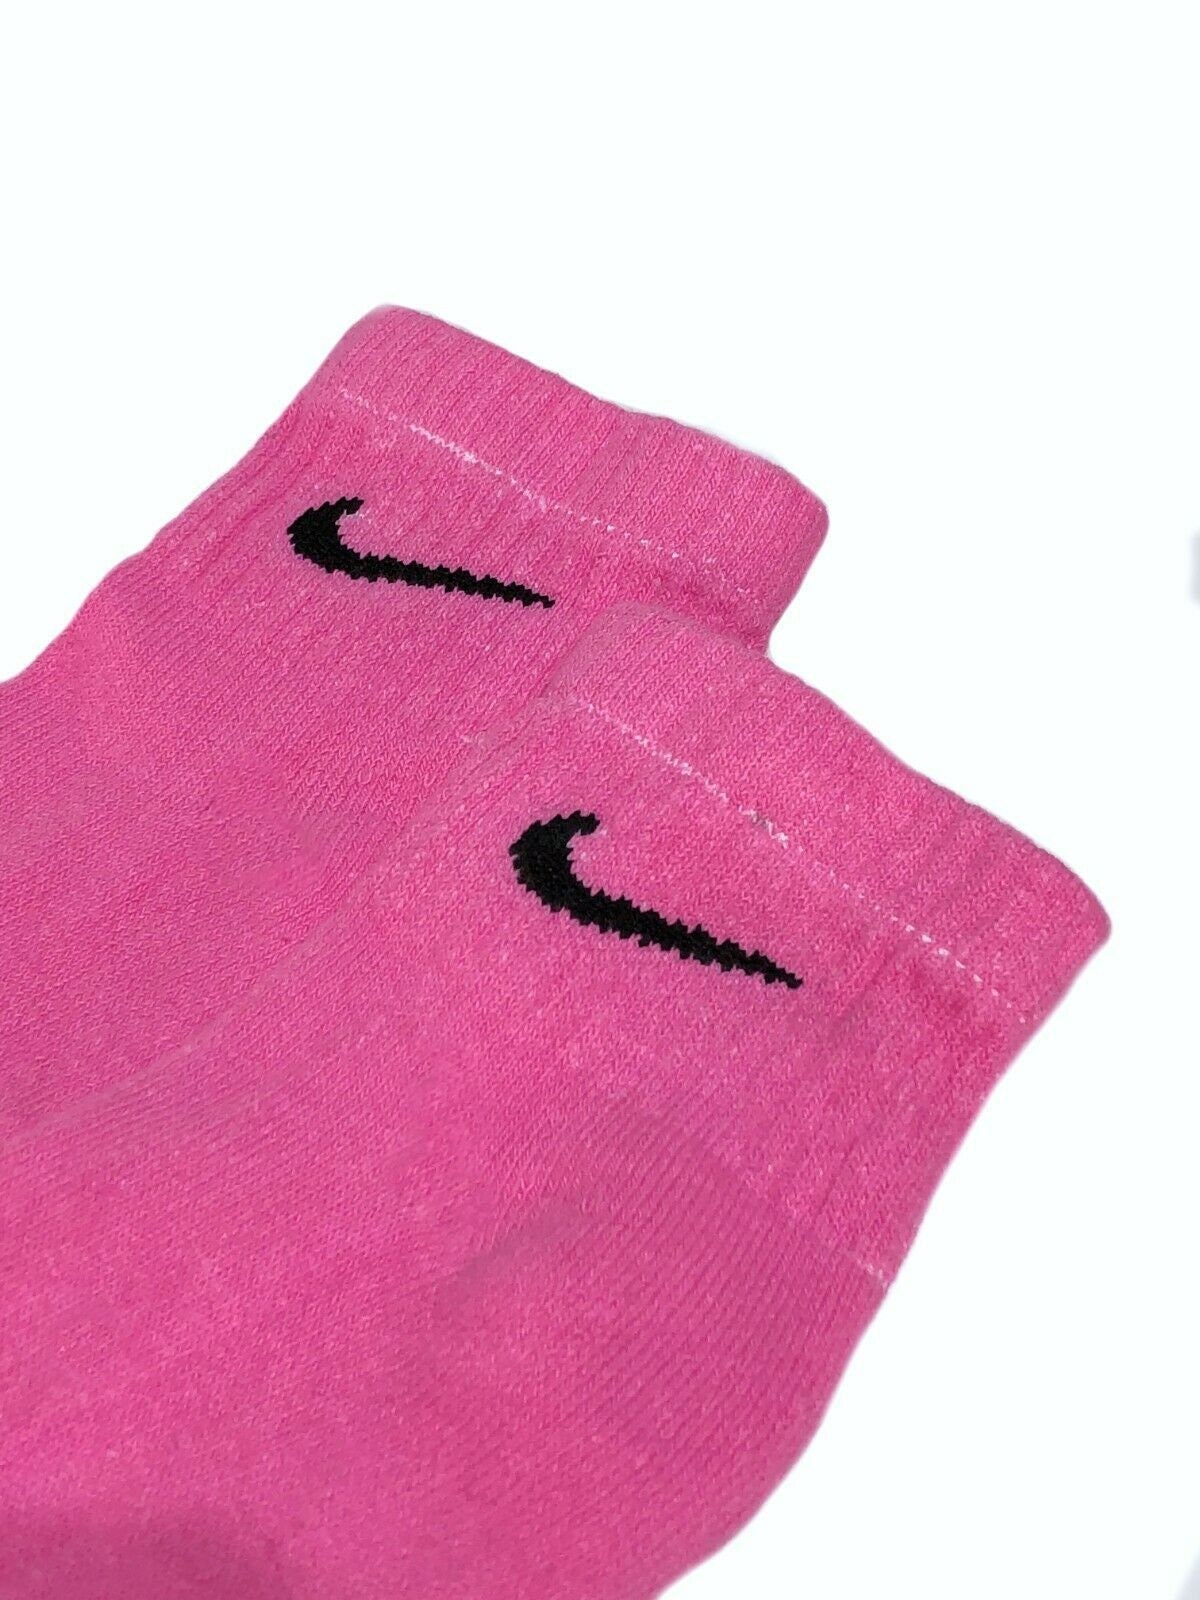 HOT PINK ANKLE Official Nike Dyed Socks Hand Crew Socks - Etsy UK